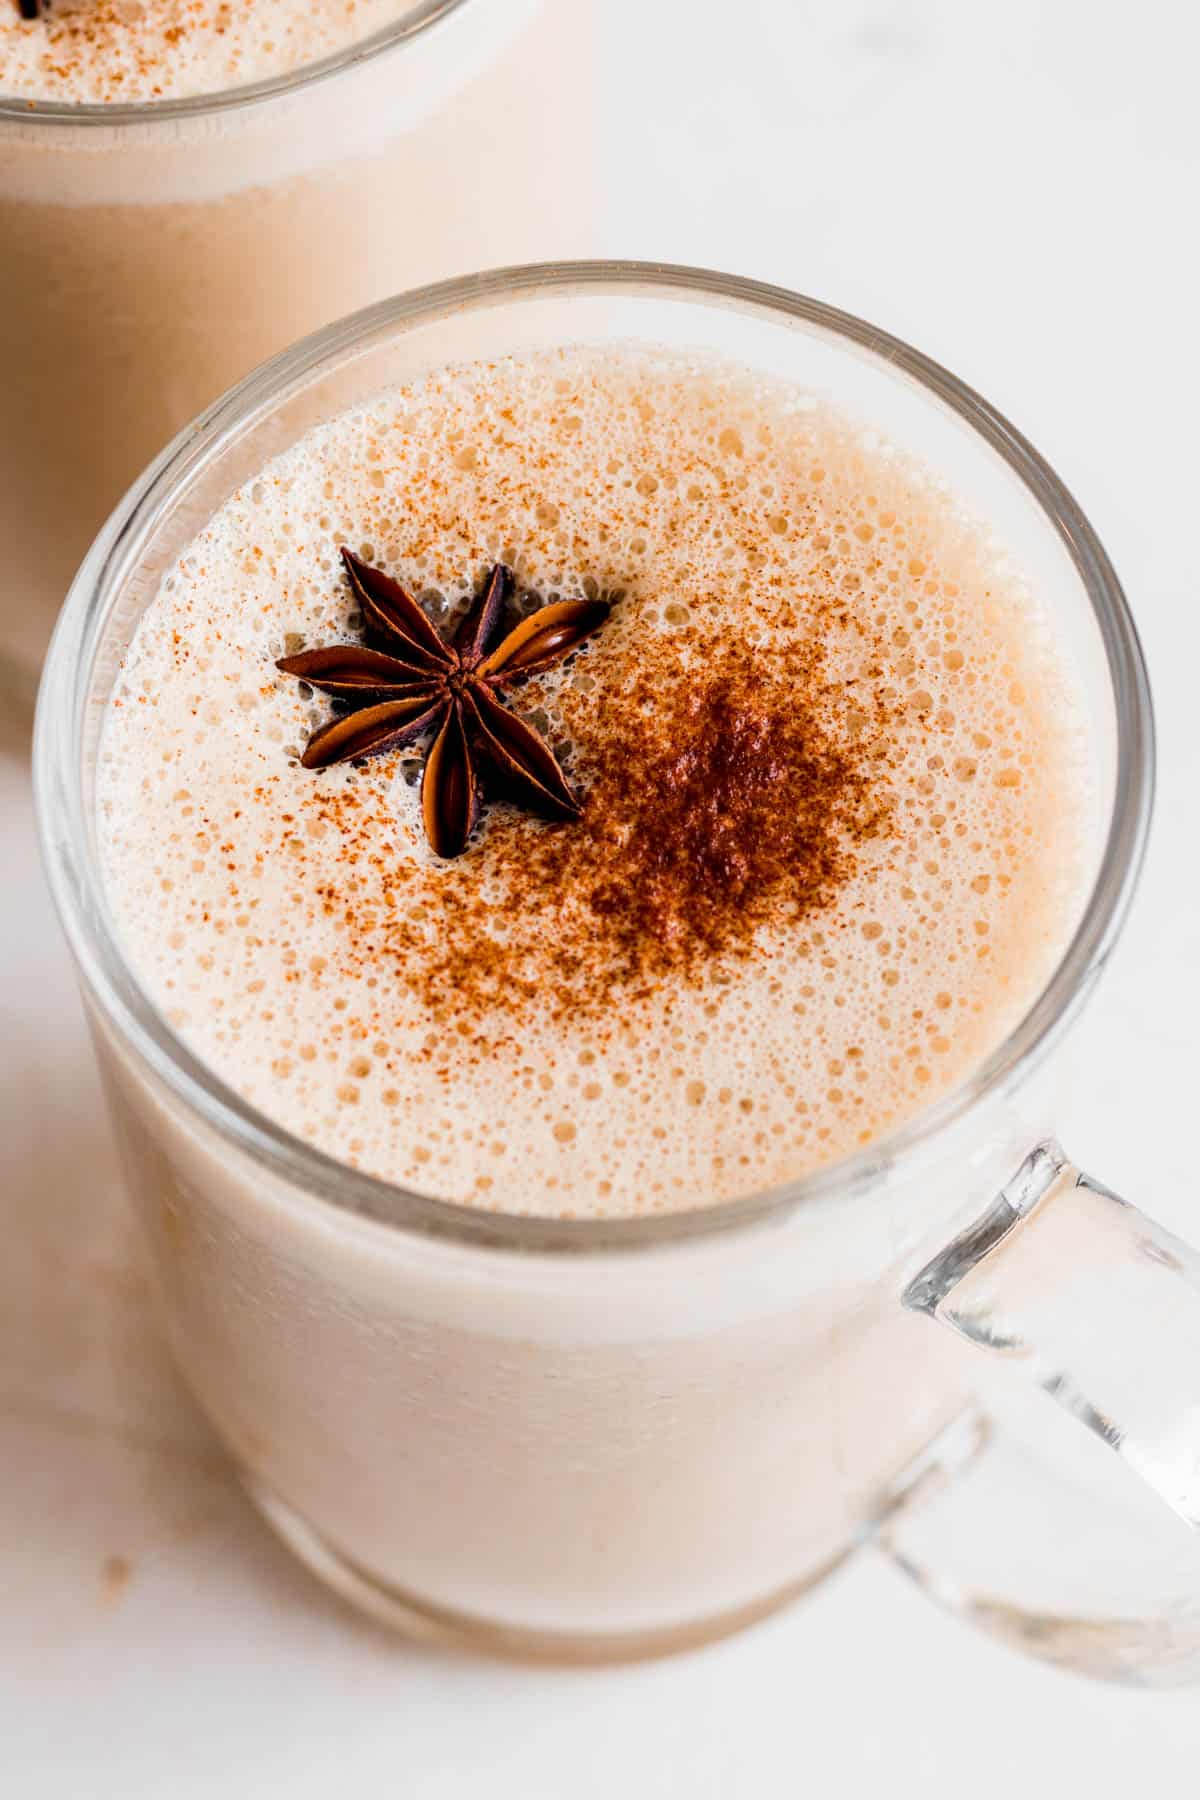 Vegan chai with star anise and cinnamon.